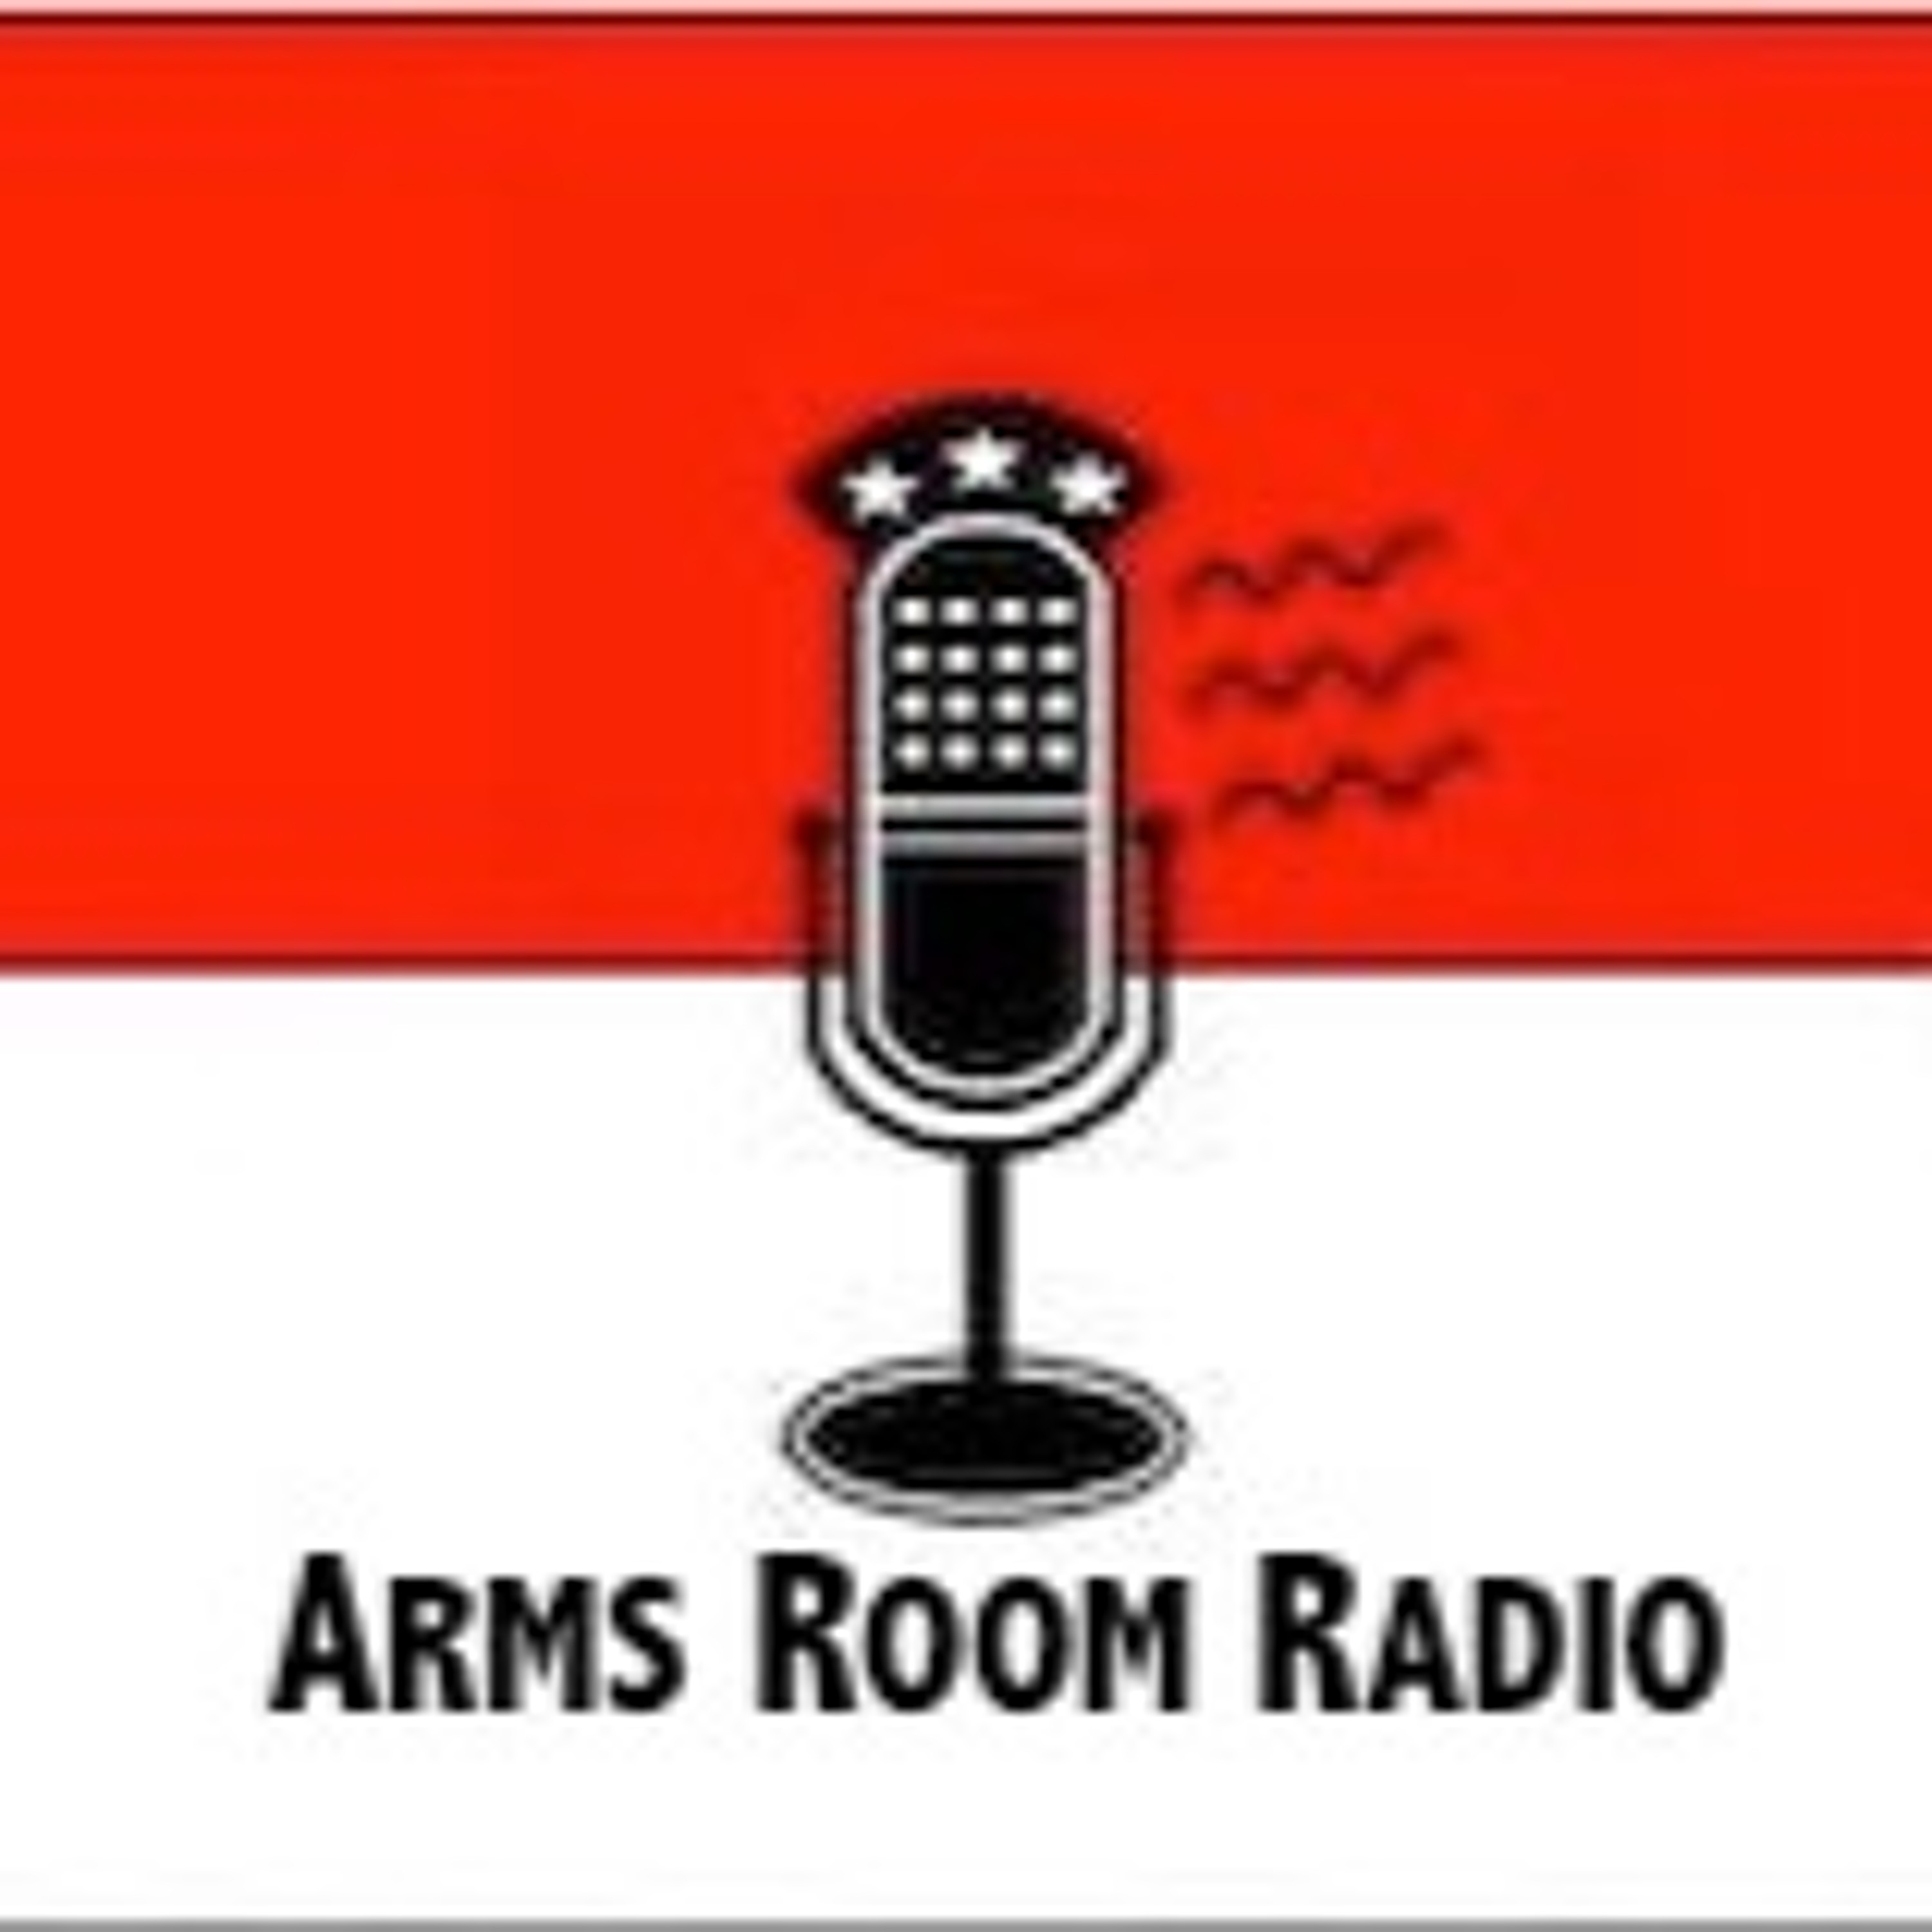 ArmsRoomRadio 02.13.21 Justin from Fenix Ammo calls, Major Bill in studio